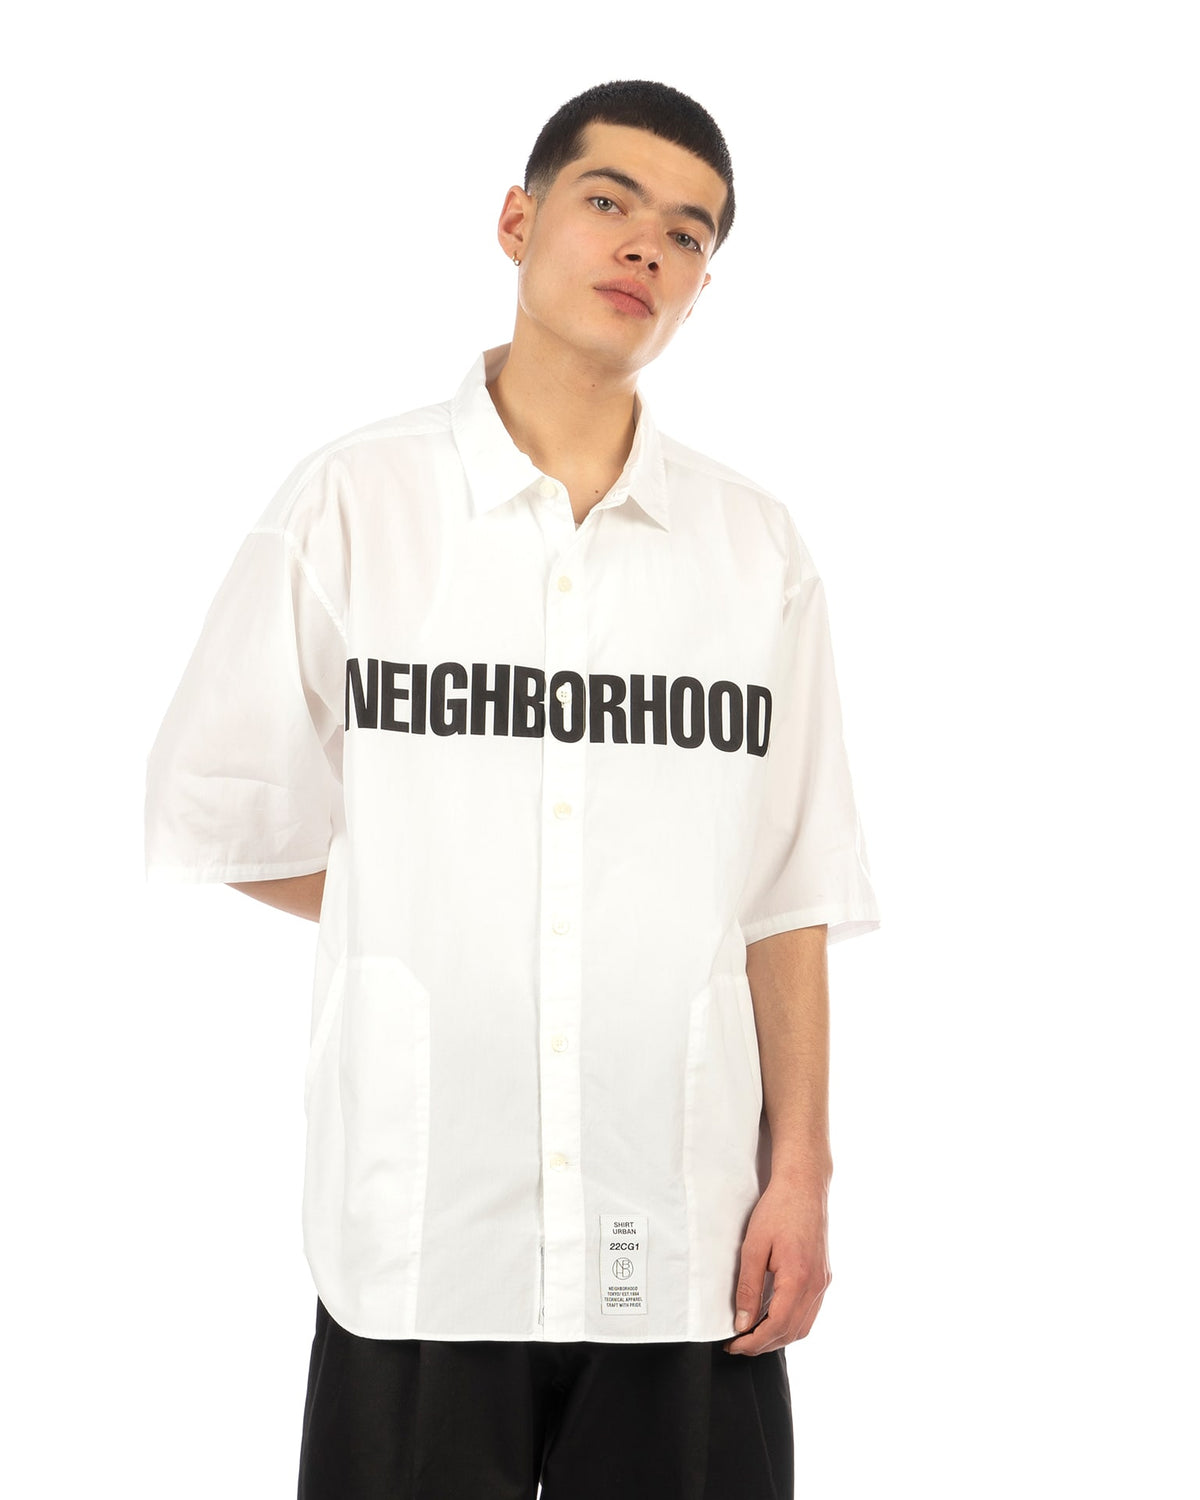 NEIGHBORHOOD | Trad Shirt White - Concrete